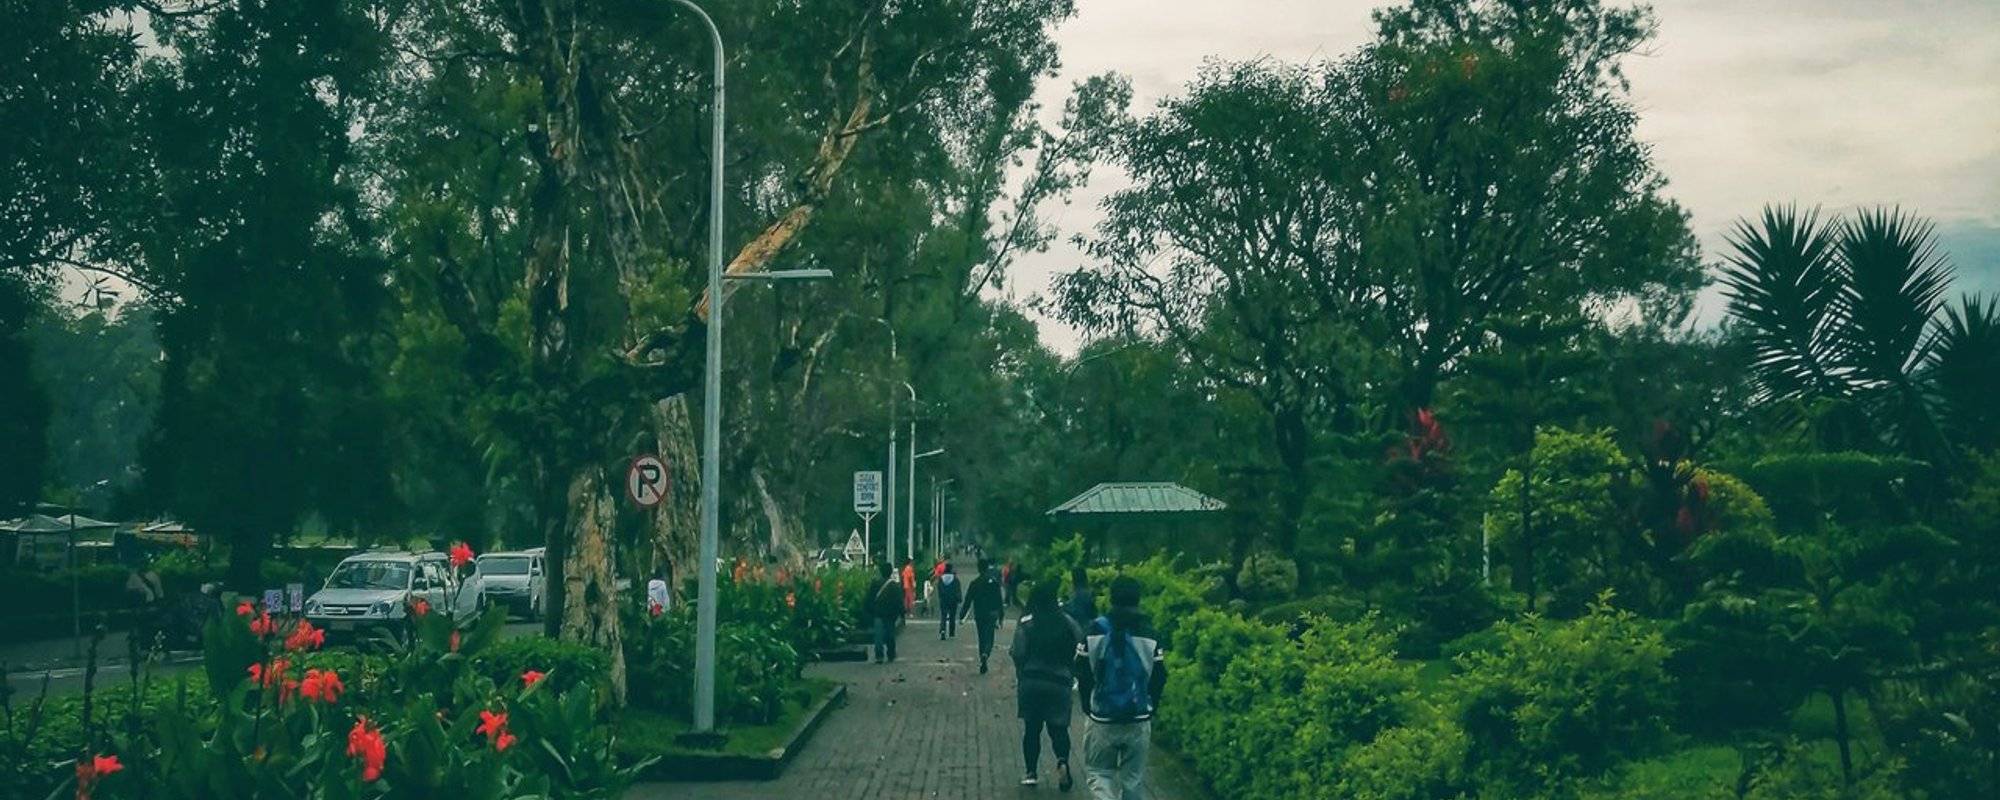 Morning walk at Burnham Park - Baguio City